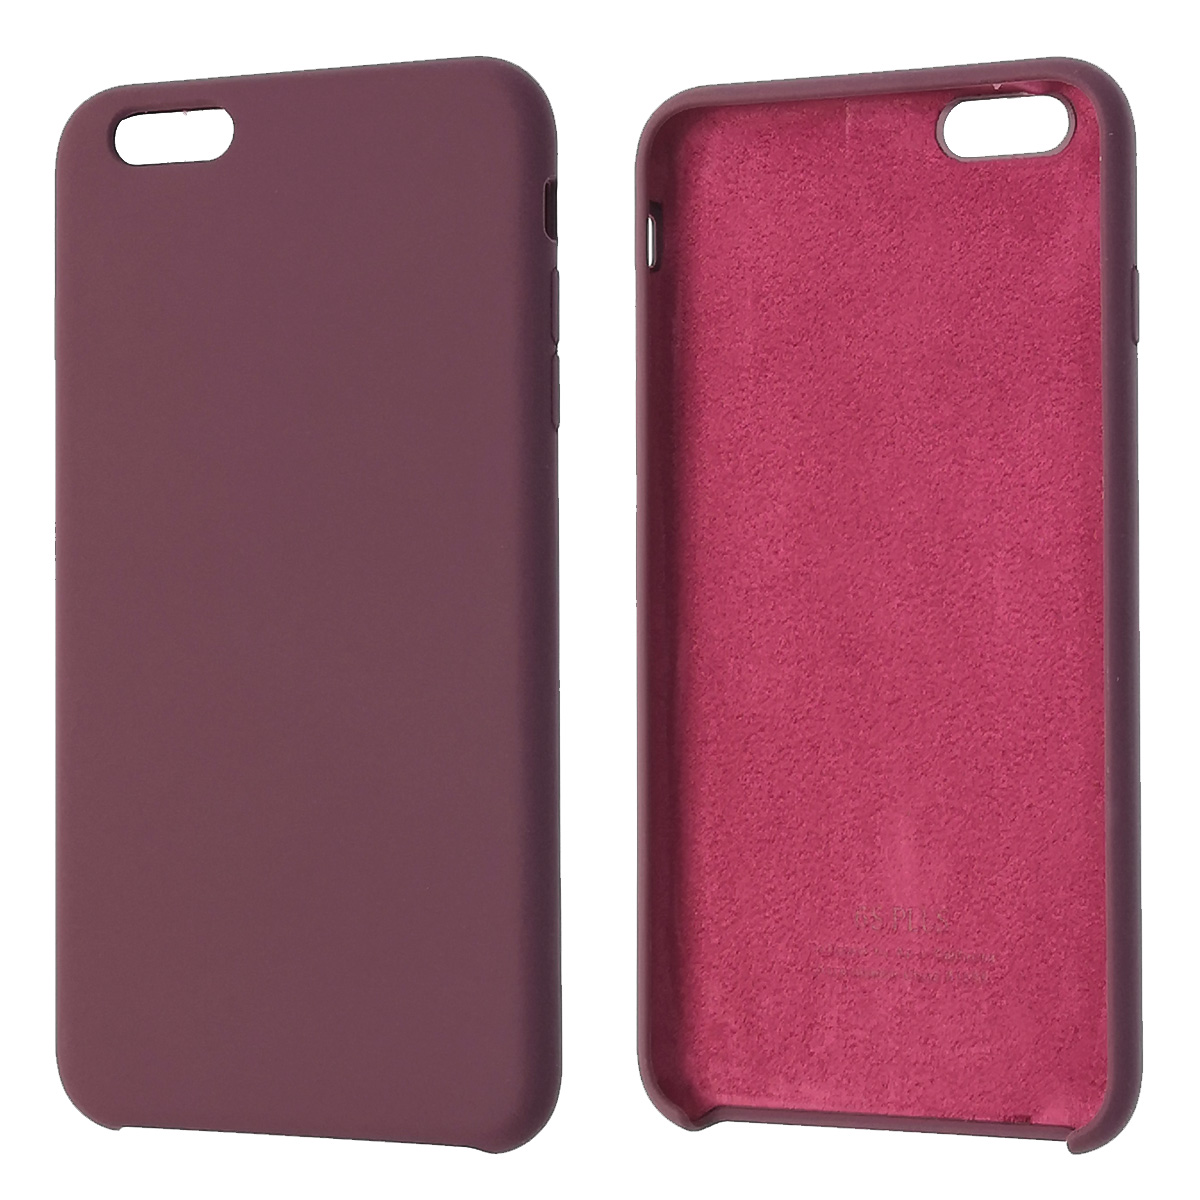 Чехол накладка Silicon Case для APPLE iPhone 6 Plus, iPhone 6S Plus, силикон, бархат, цвет темно пурпурный